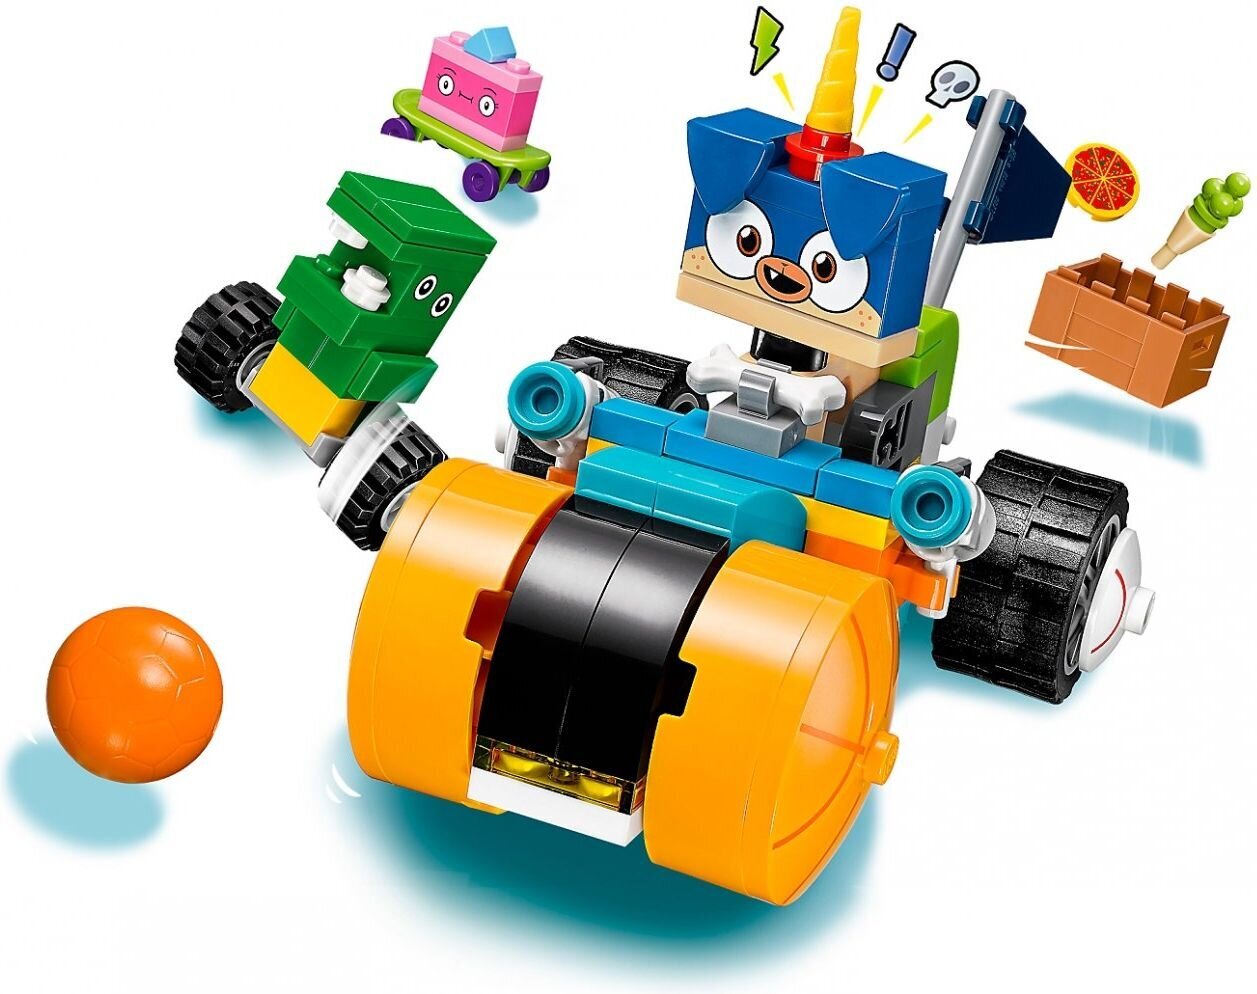 41452 LEGO® Unikitty Prince Puppycorn Trike цена и информация | Konstruktoriai ir kaladėlės | pigu.lt